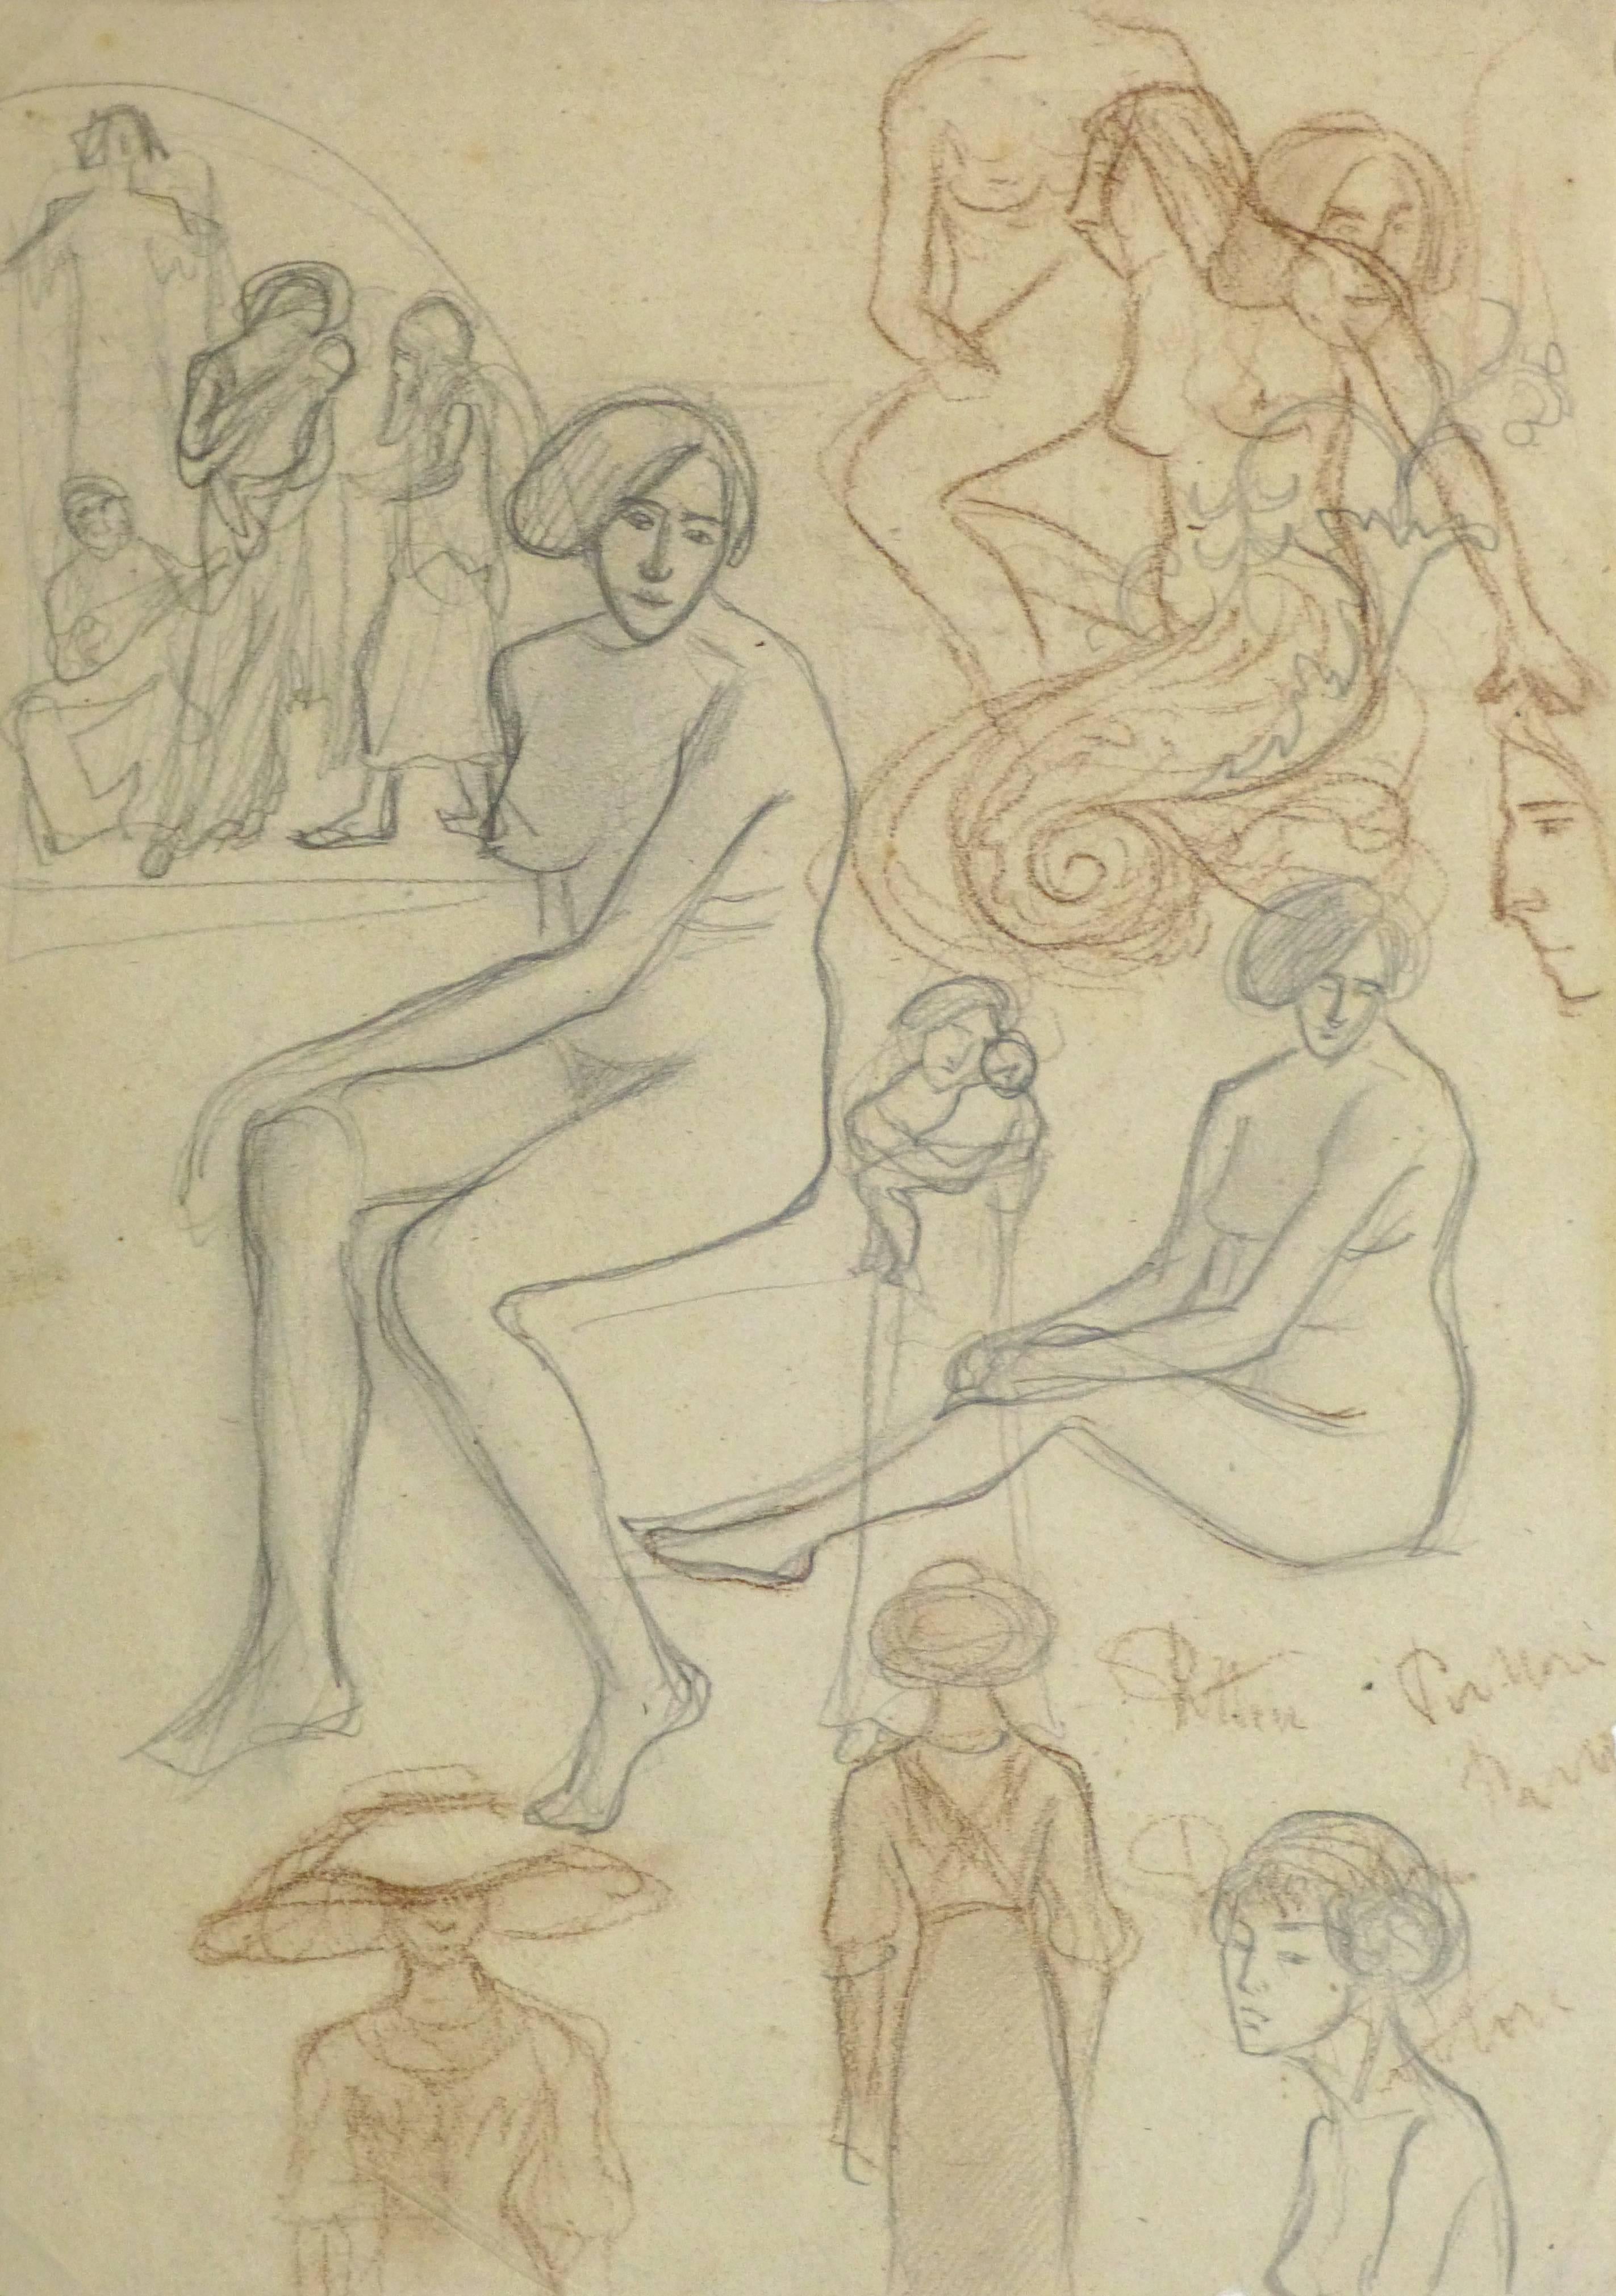 Fantini Figurative Art - Antique Pencil and Charcoal Sketch - Female Figure Study